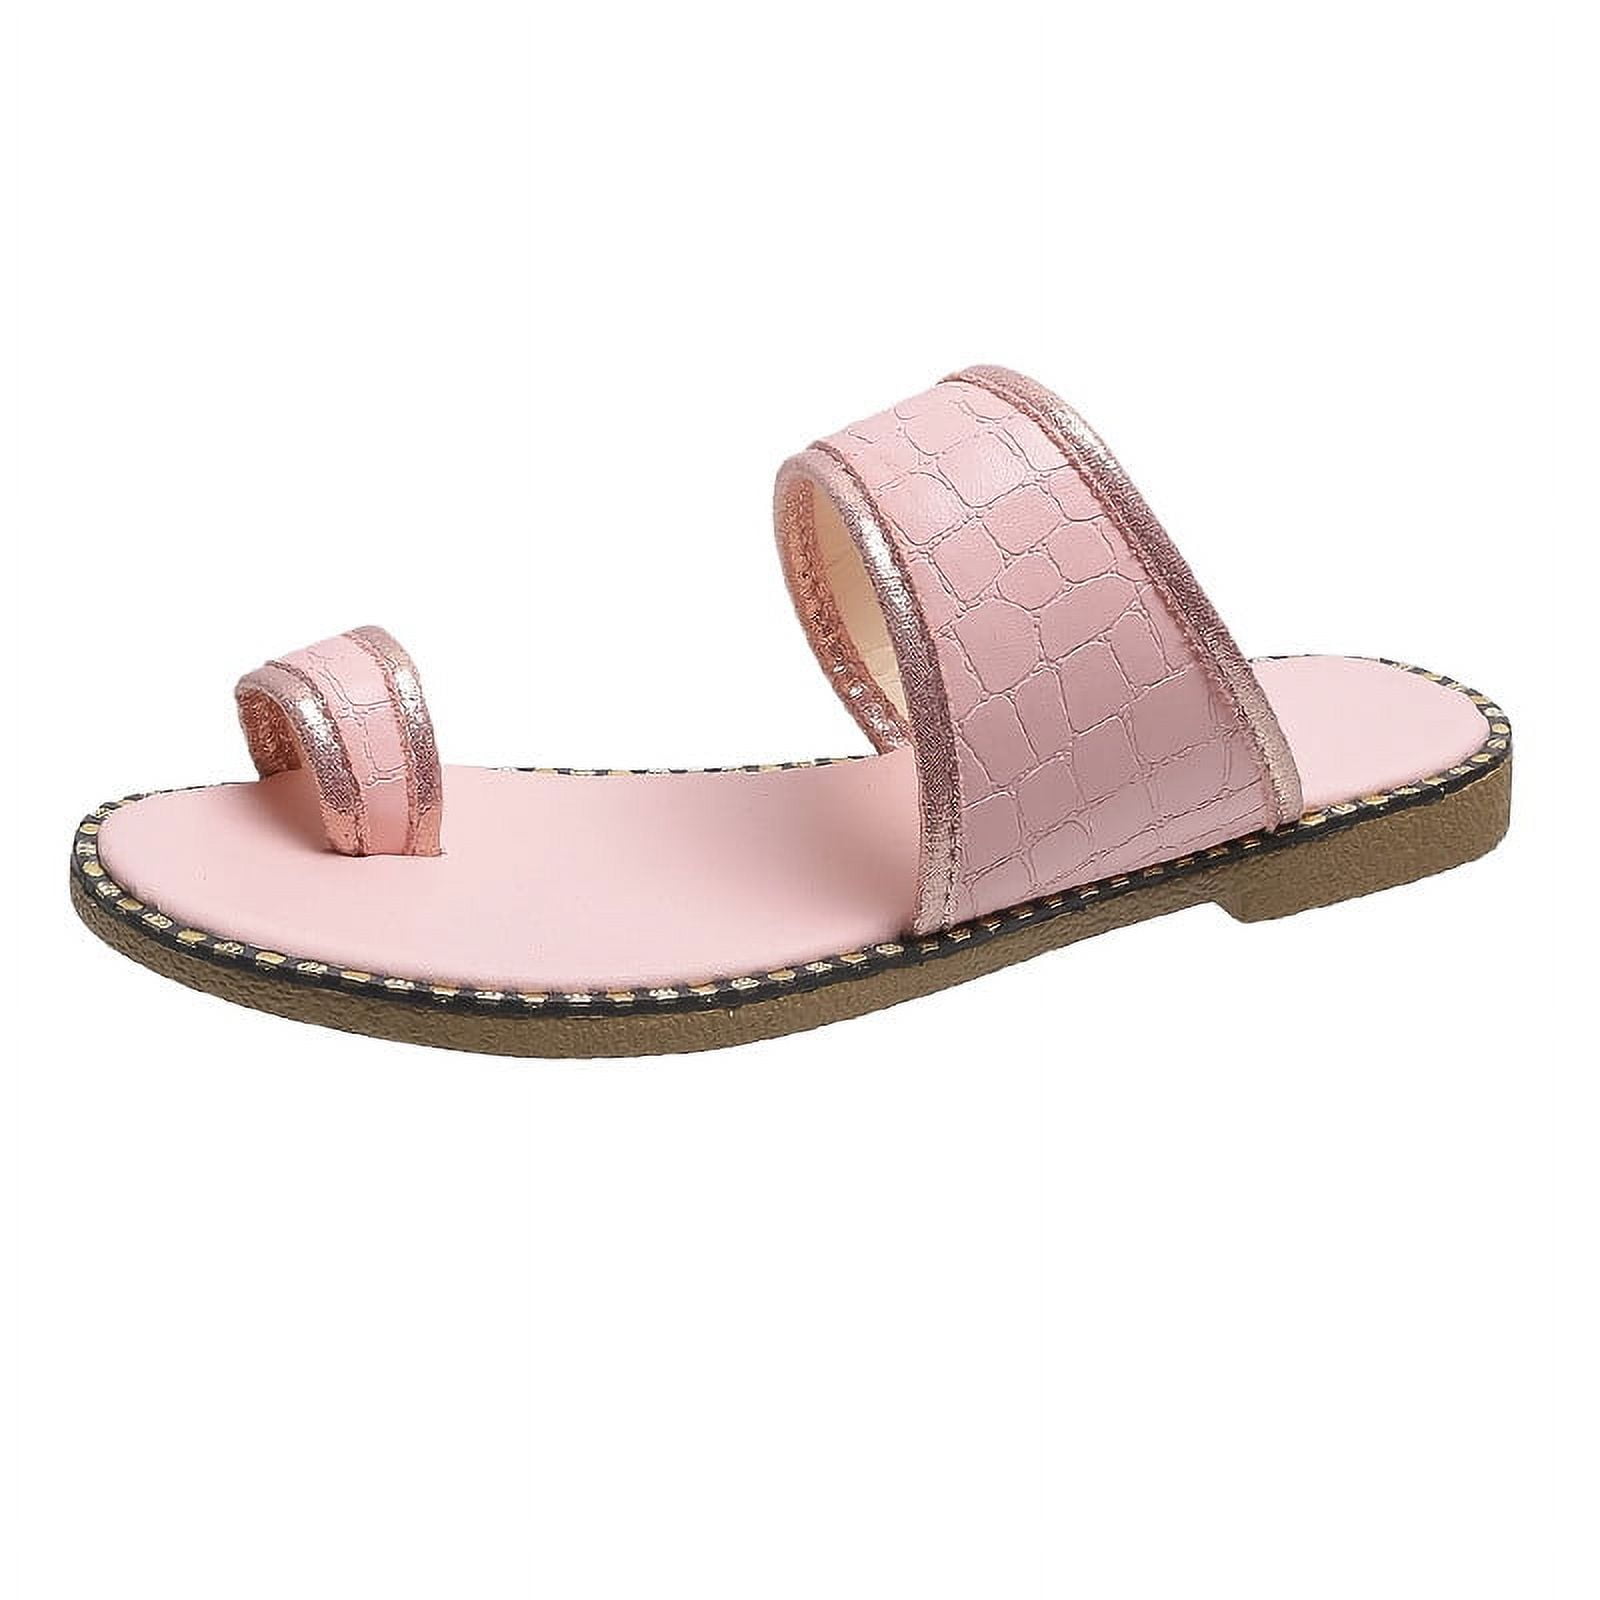 KBKYBUYZ Summer New Women's Shoes Solid Sequin Edge Casual Slipper Toe Sandals Women Slippers Women Clearance - Walmart.com